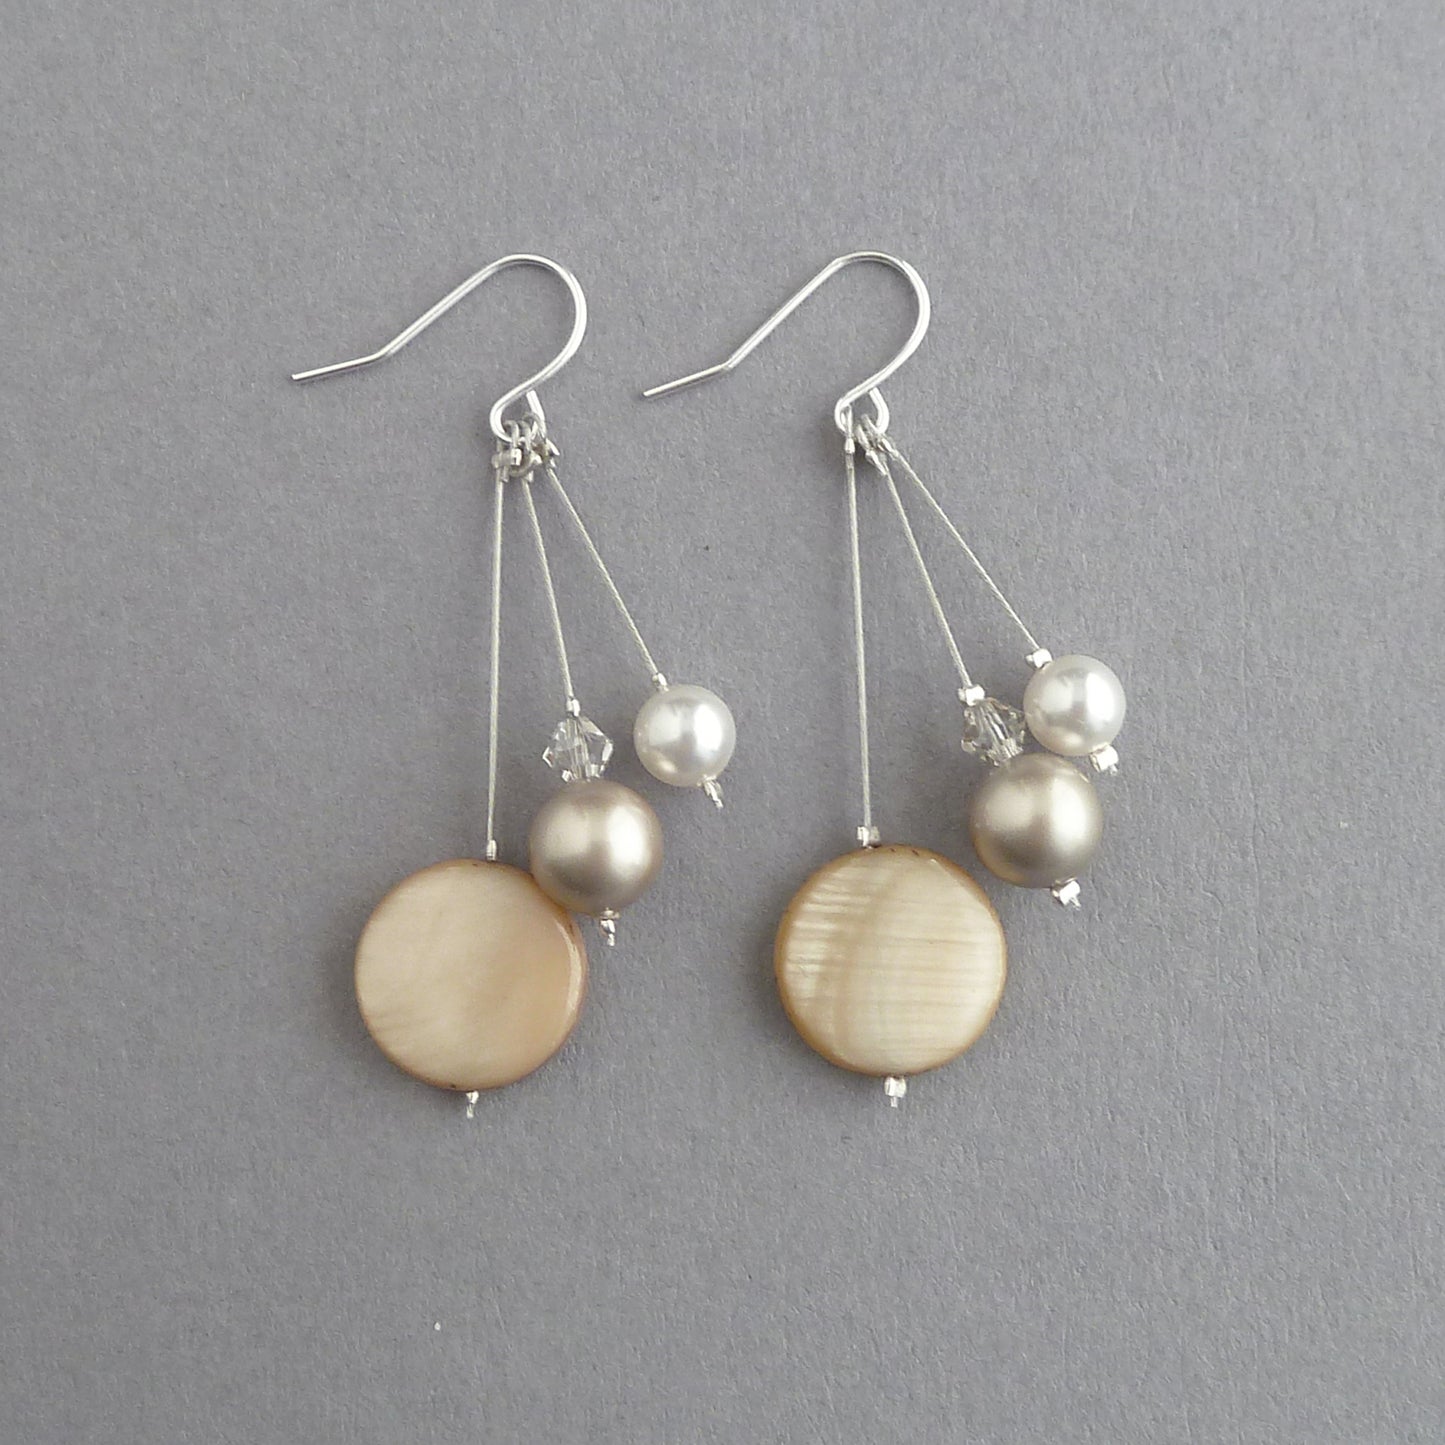 Champagne pearl earrings